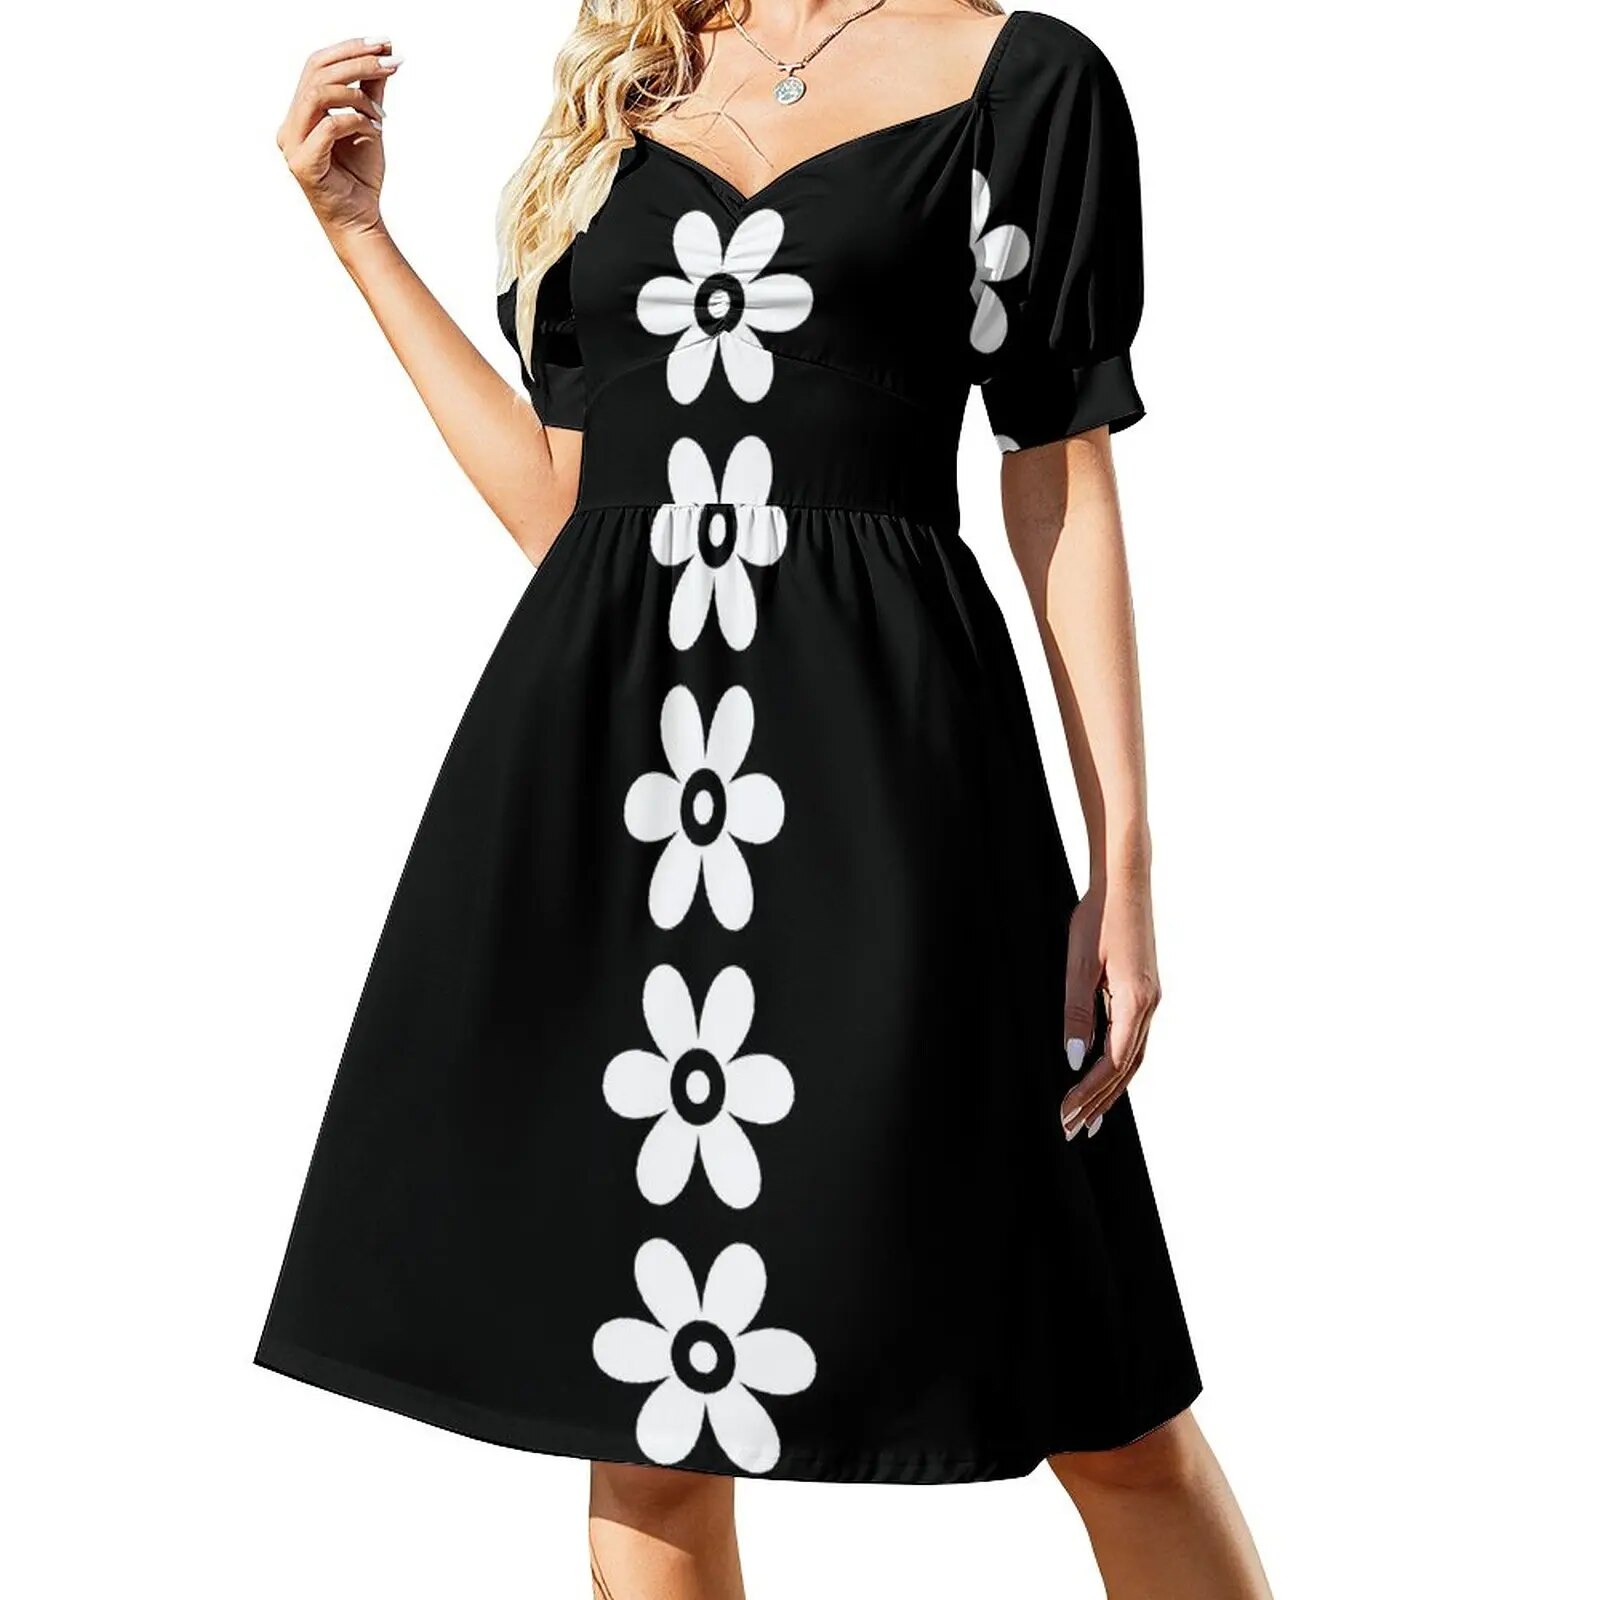 Black & White - Retro Daisy Flower - 60s Mod Dress Woman clothes ...